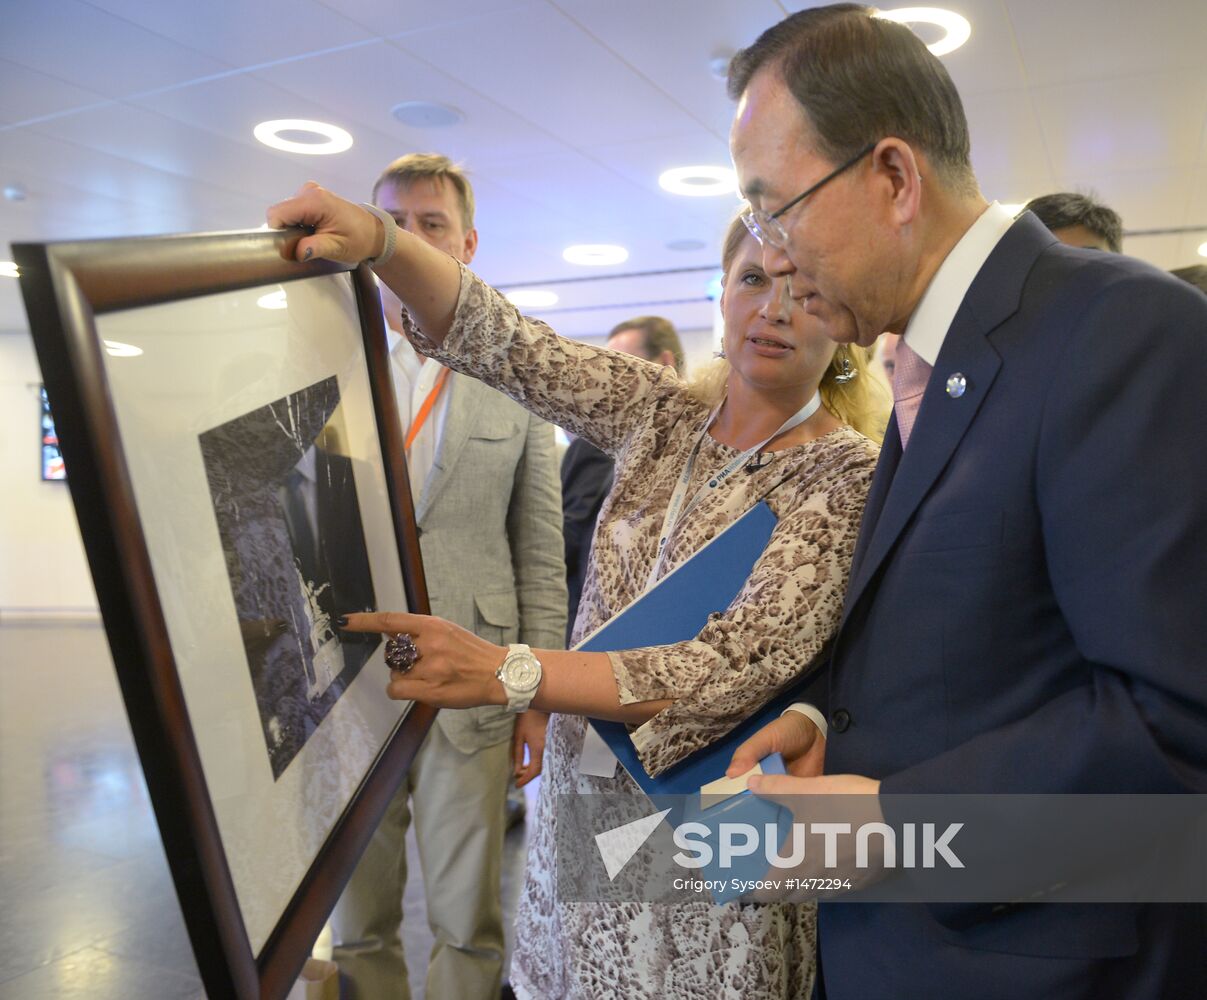 UN Secretary-General Ban Ki-moon visits RIA Novosti